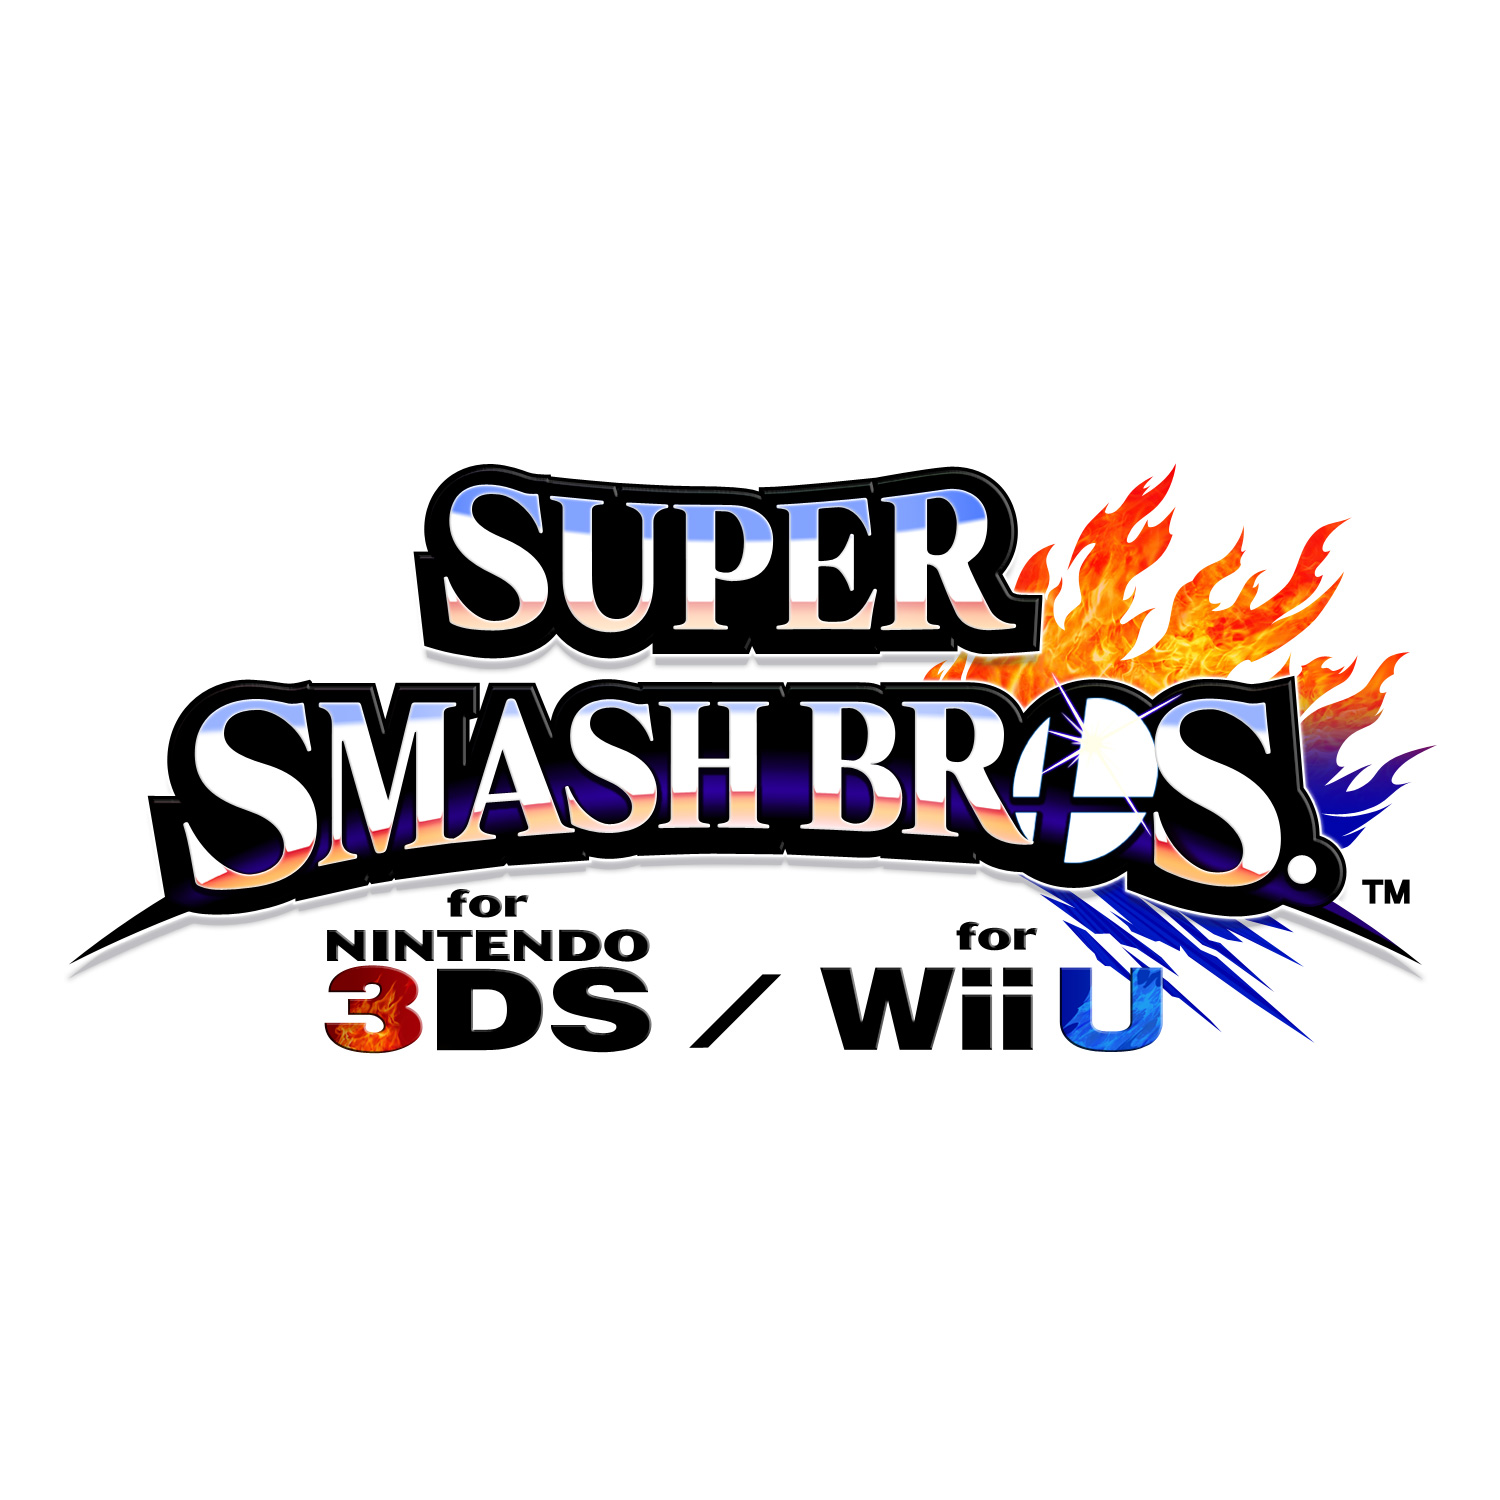 High Resolution Wallpaper | Super Smash Bros. 4 1500x1500 px